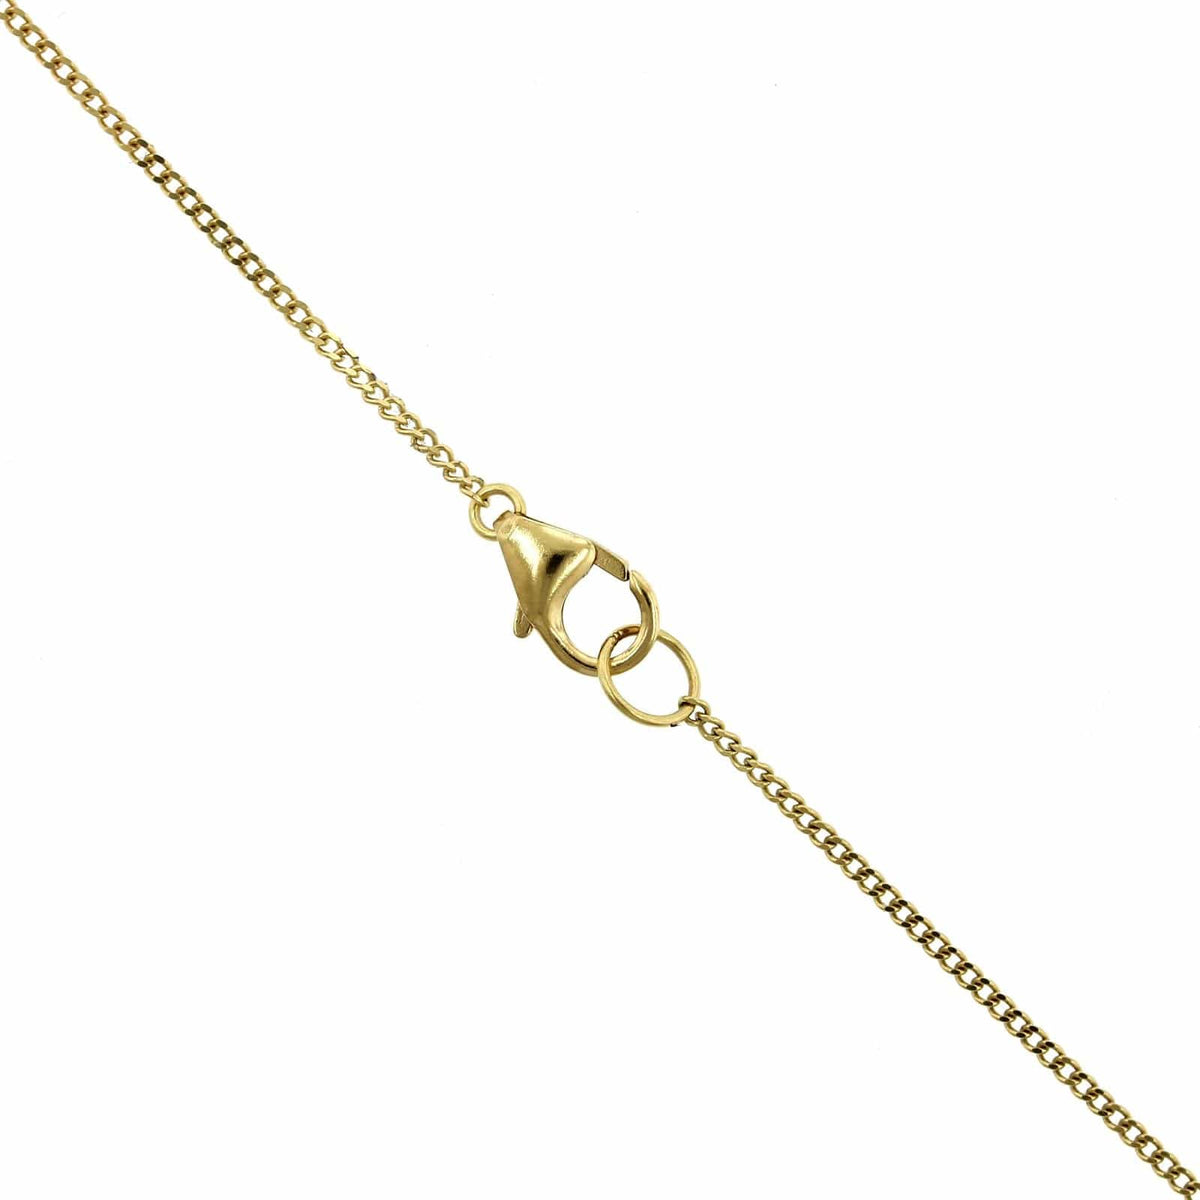 Amali 18K Yellow Gold Teardrop Opal Necklace